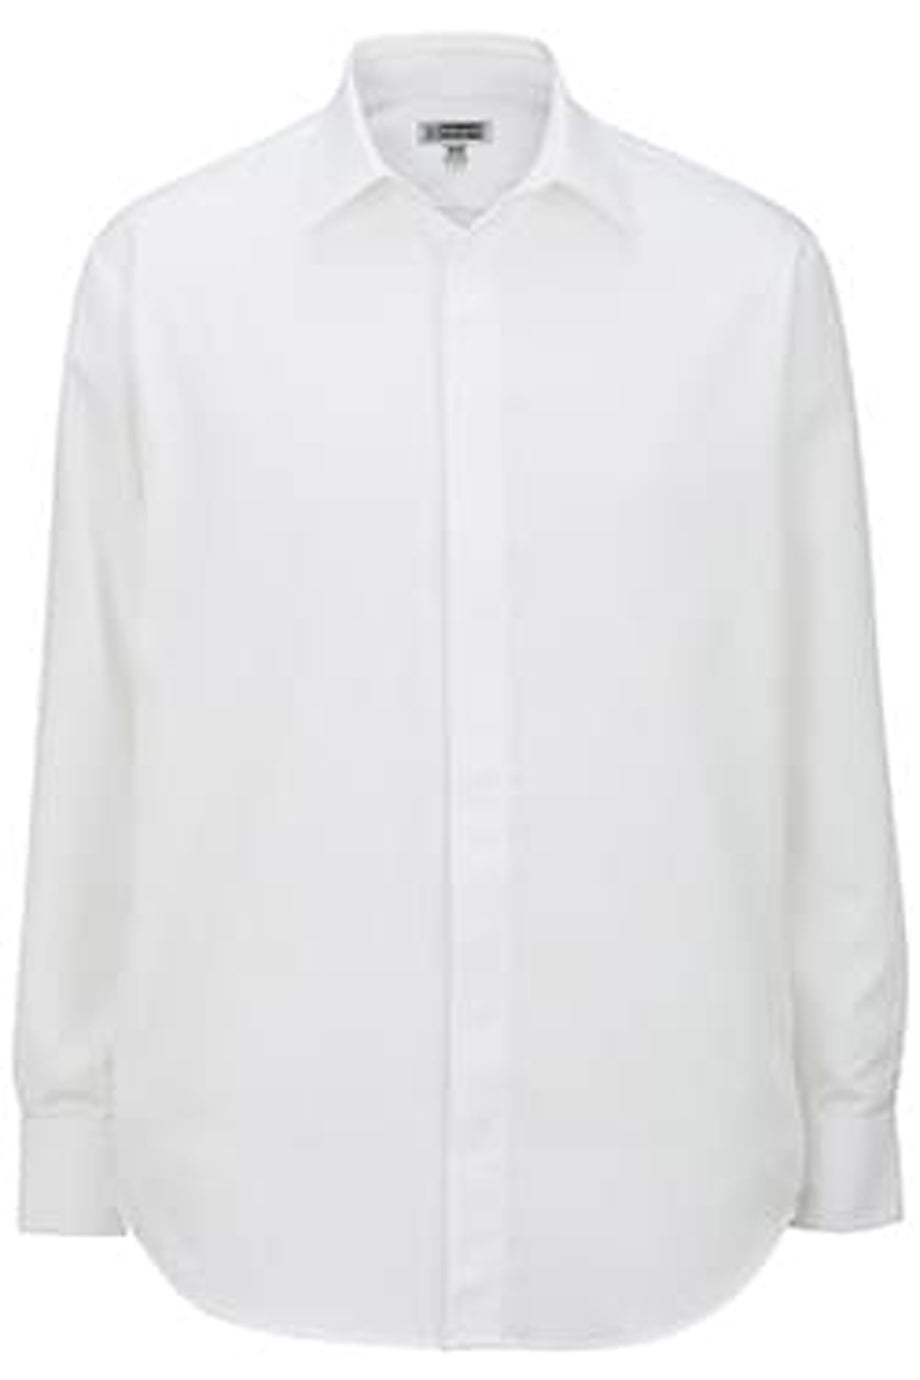 Edwards Men's White Café Batiste Shirt